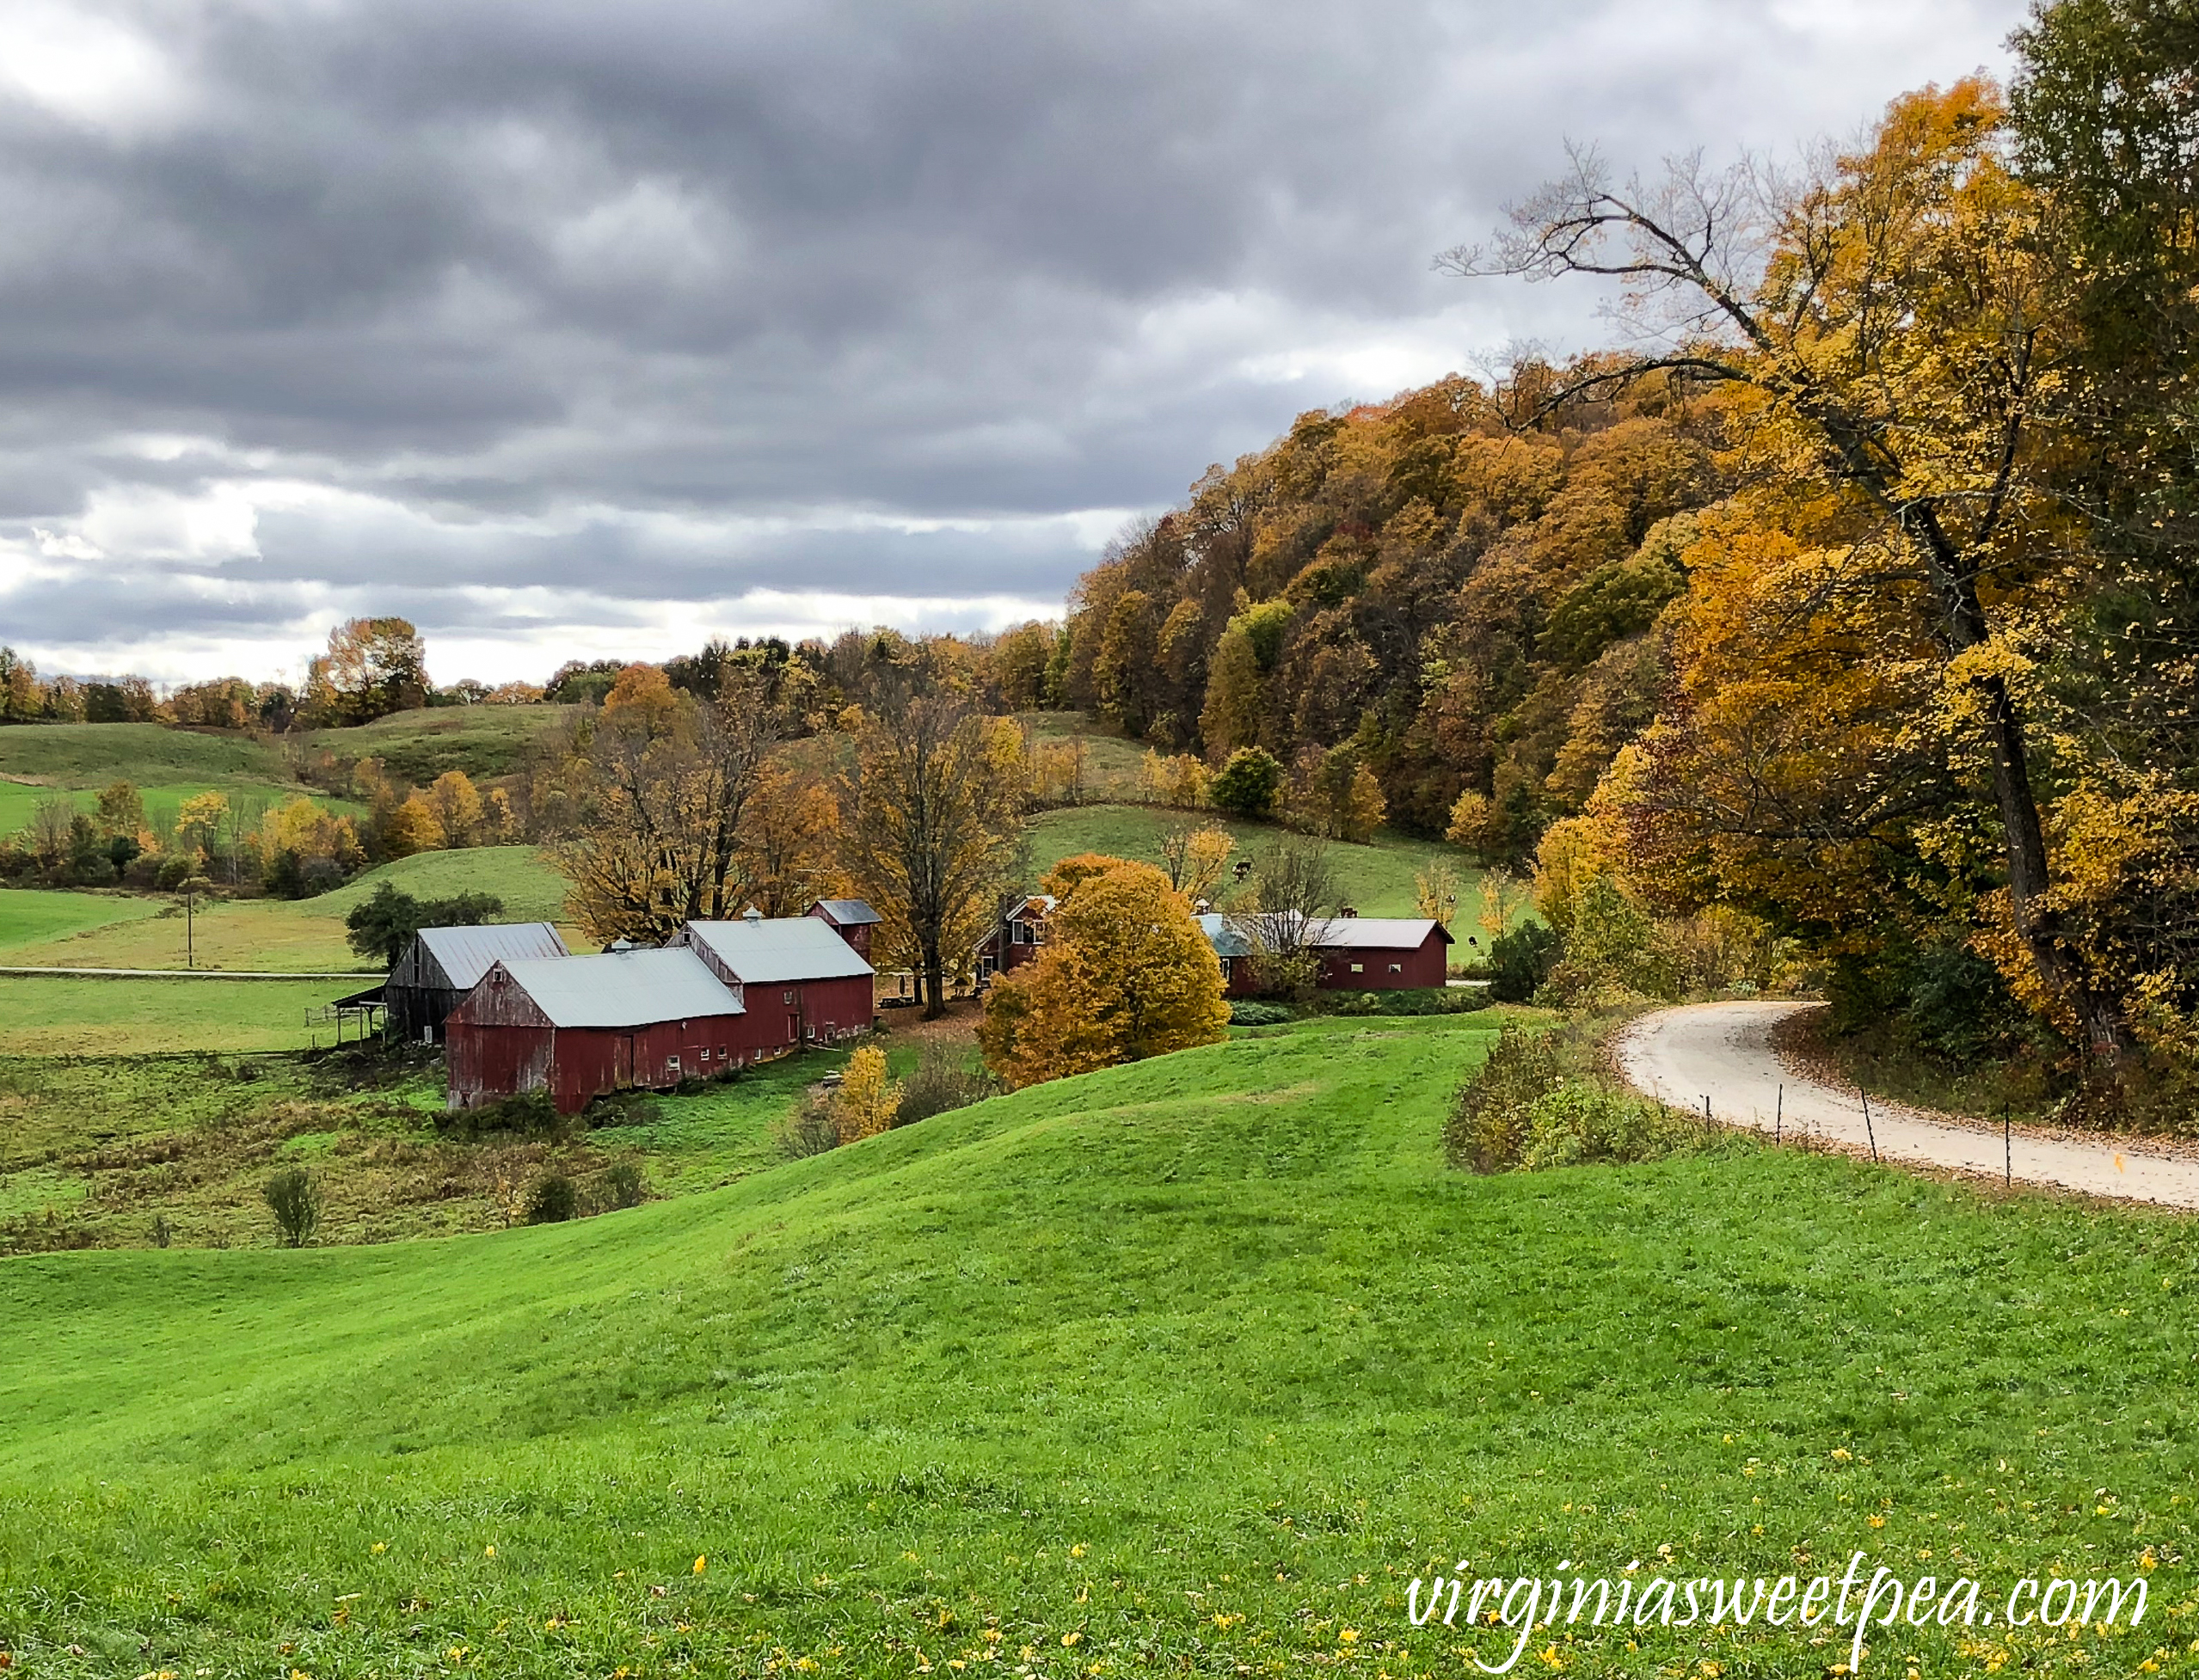 The Jenny Farm in Vermont #vermont #fallinvermont #fall